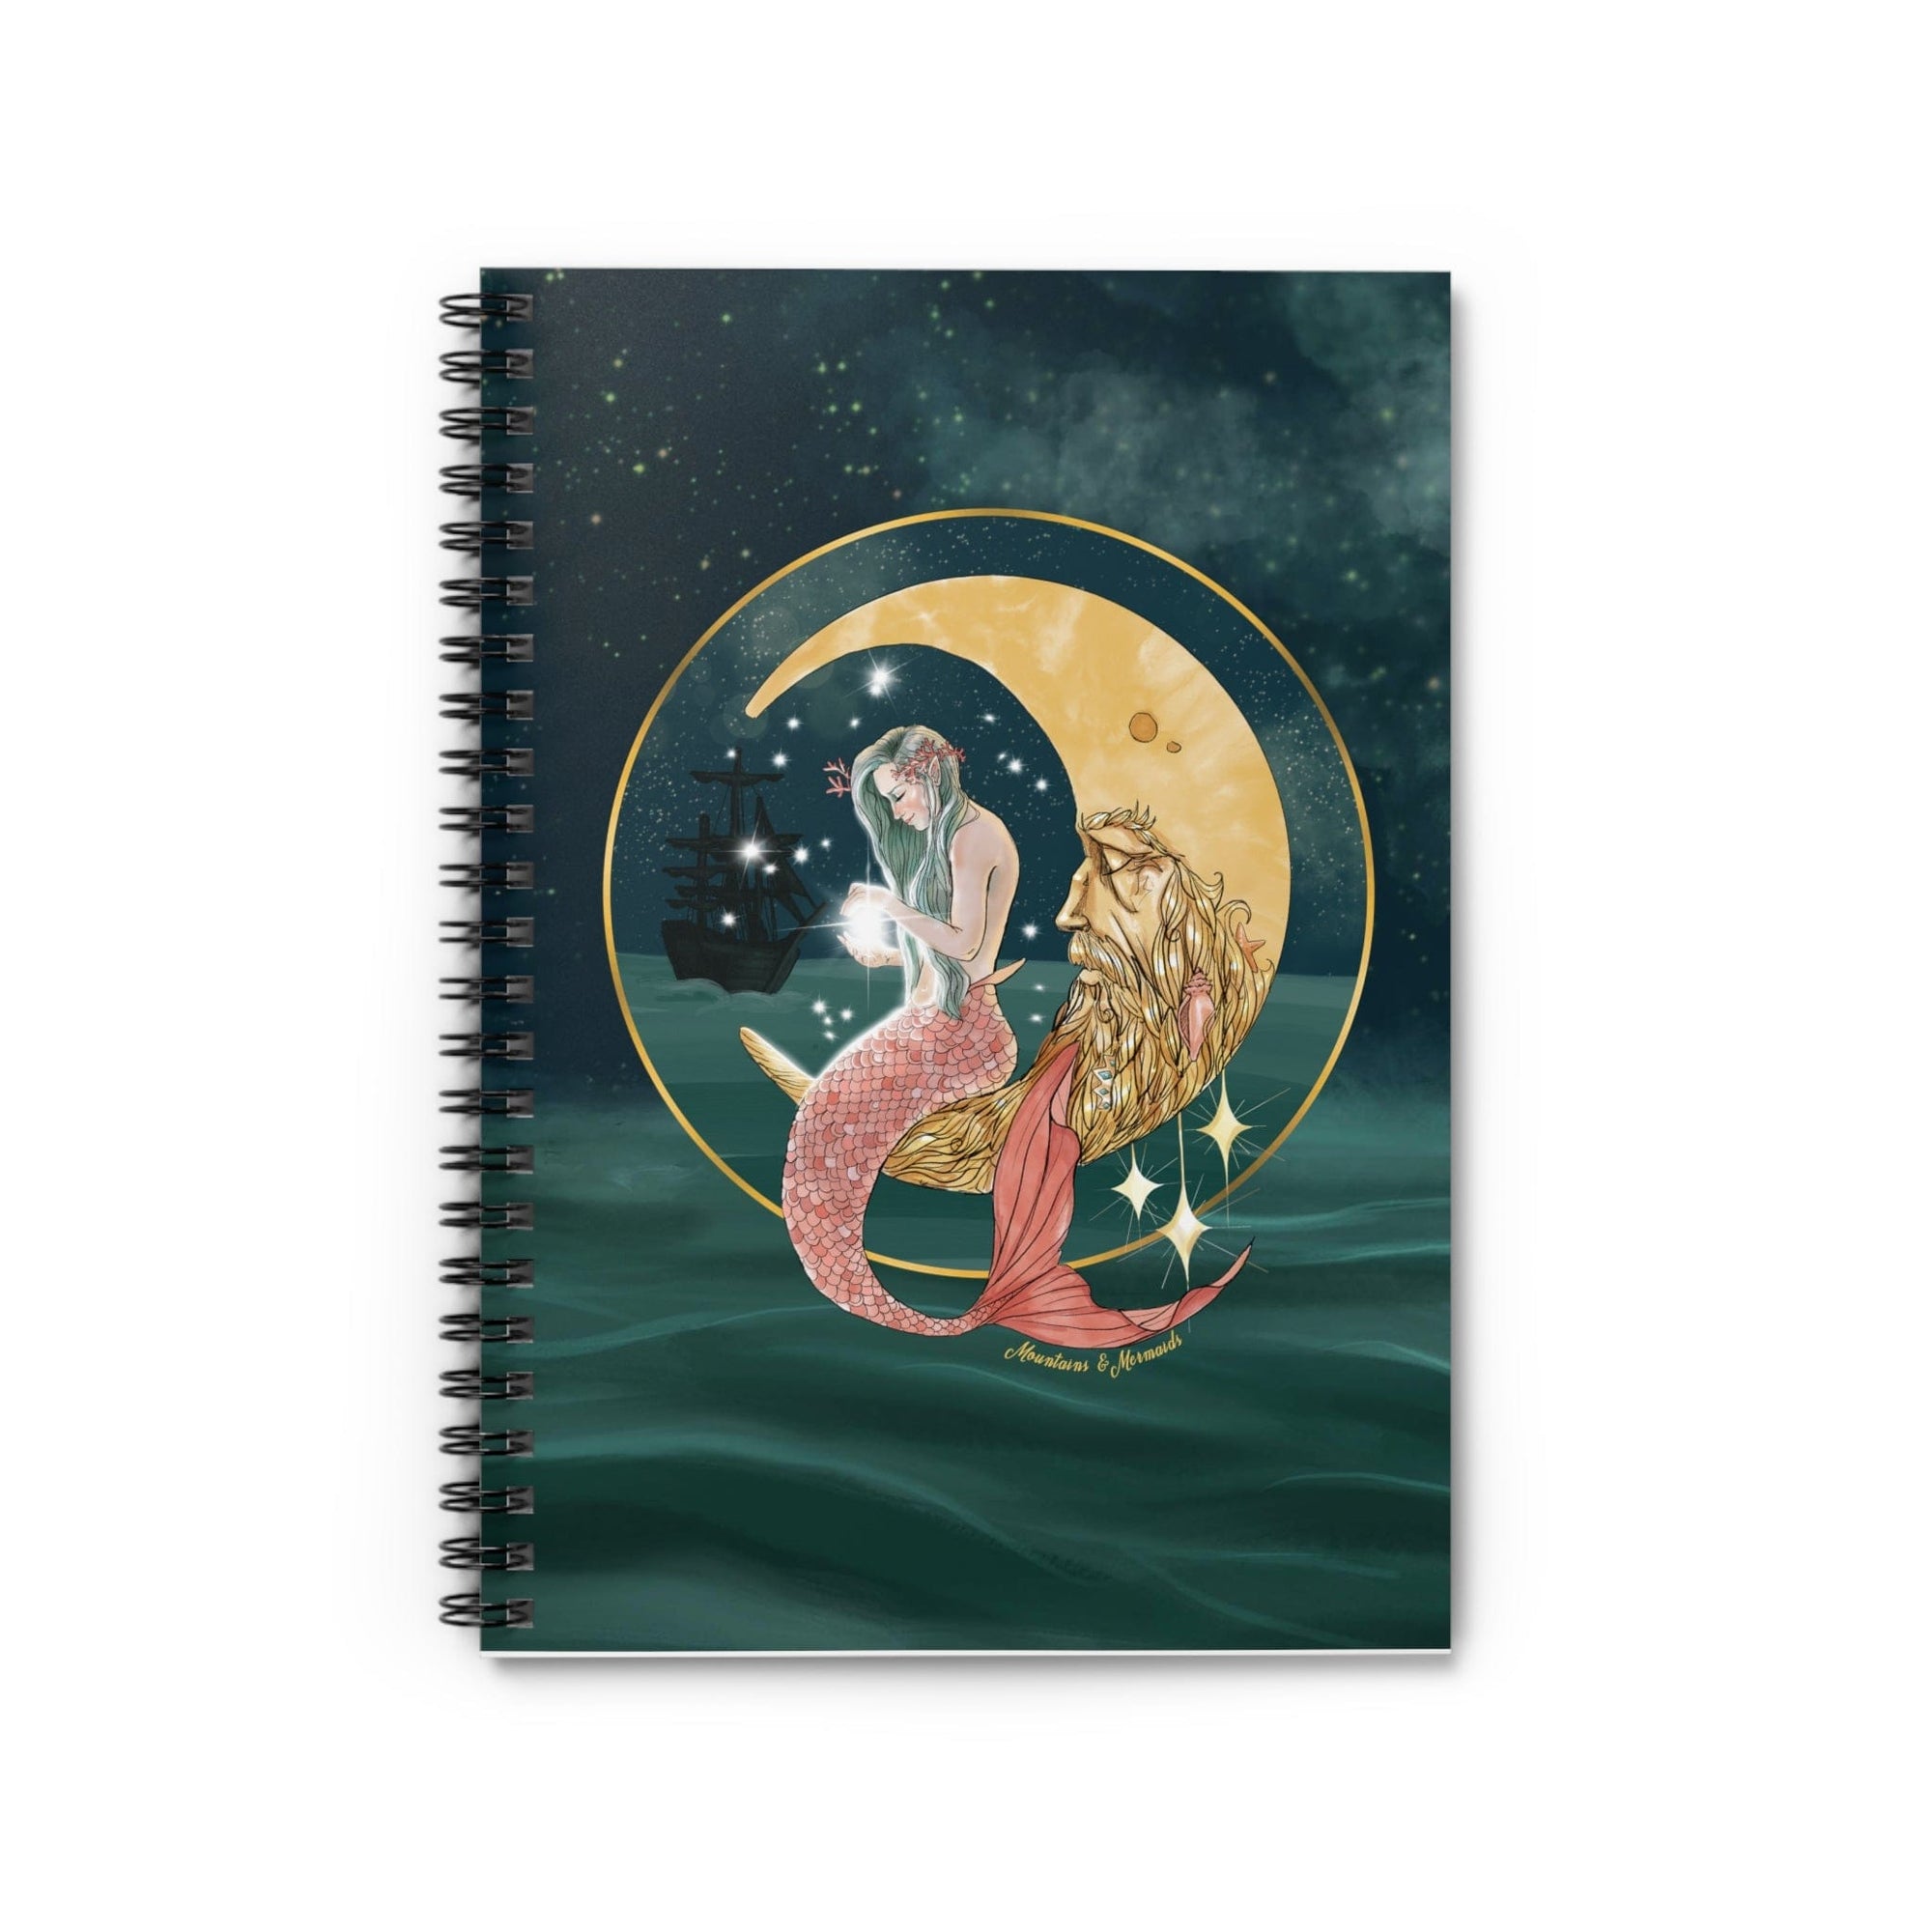 Mermaid In The Moon Spiral Notebook - Ruled Line - Mountains & Mermaids